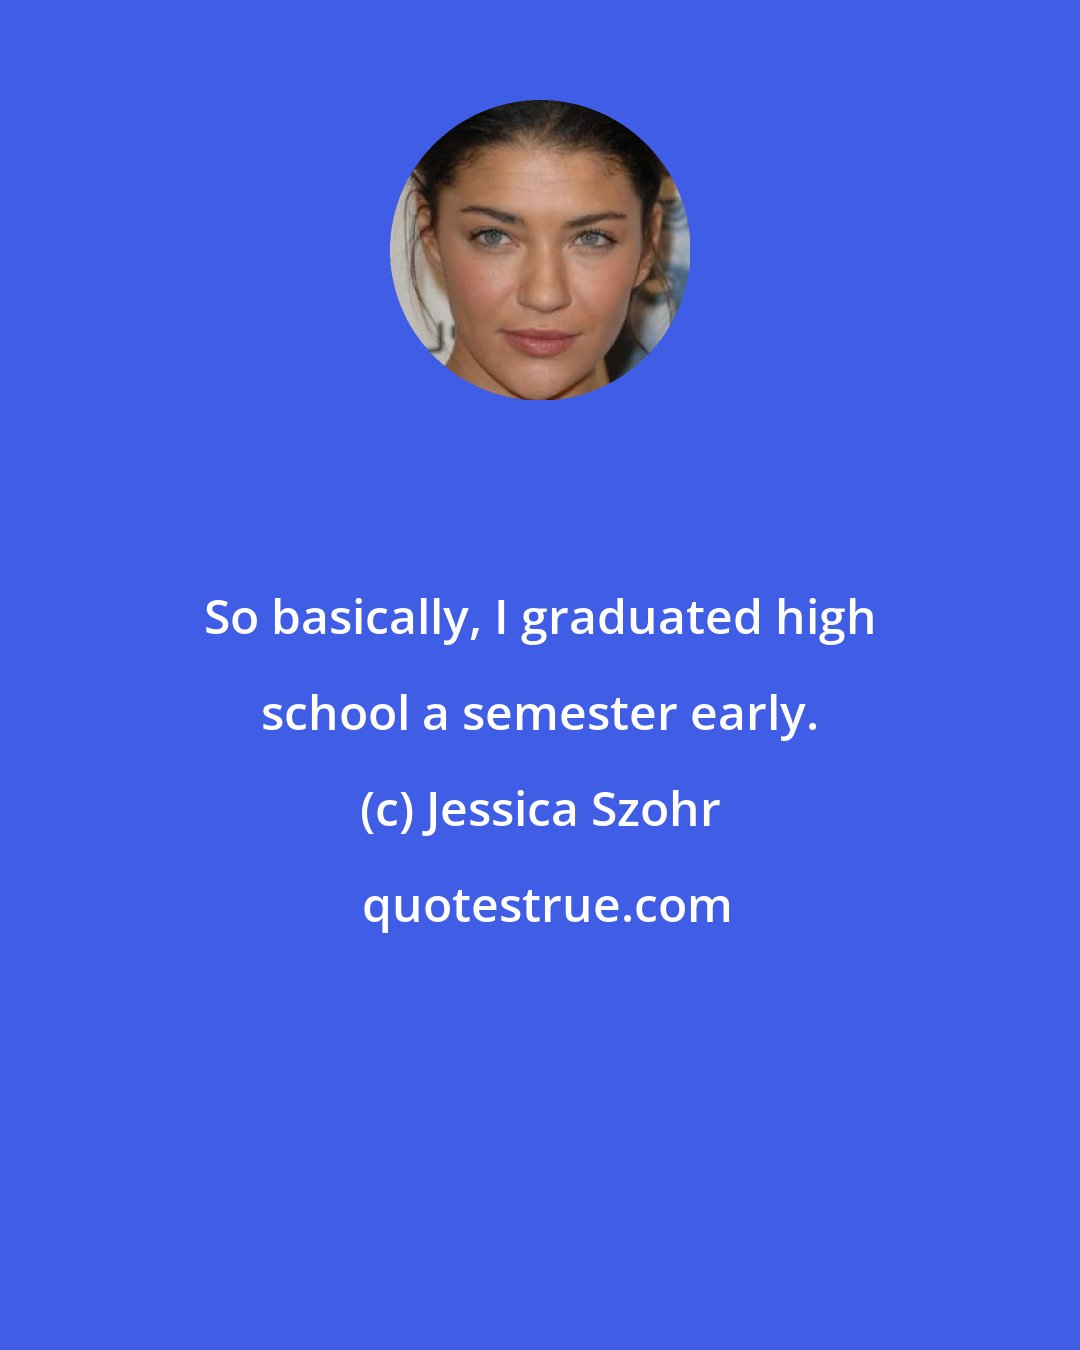 Jessica Szohr: So basically, I graduated high school a semester early.